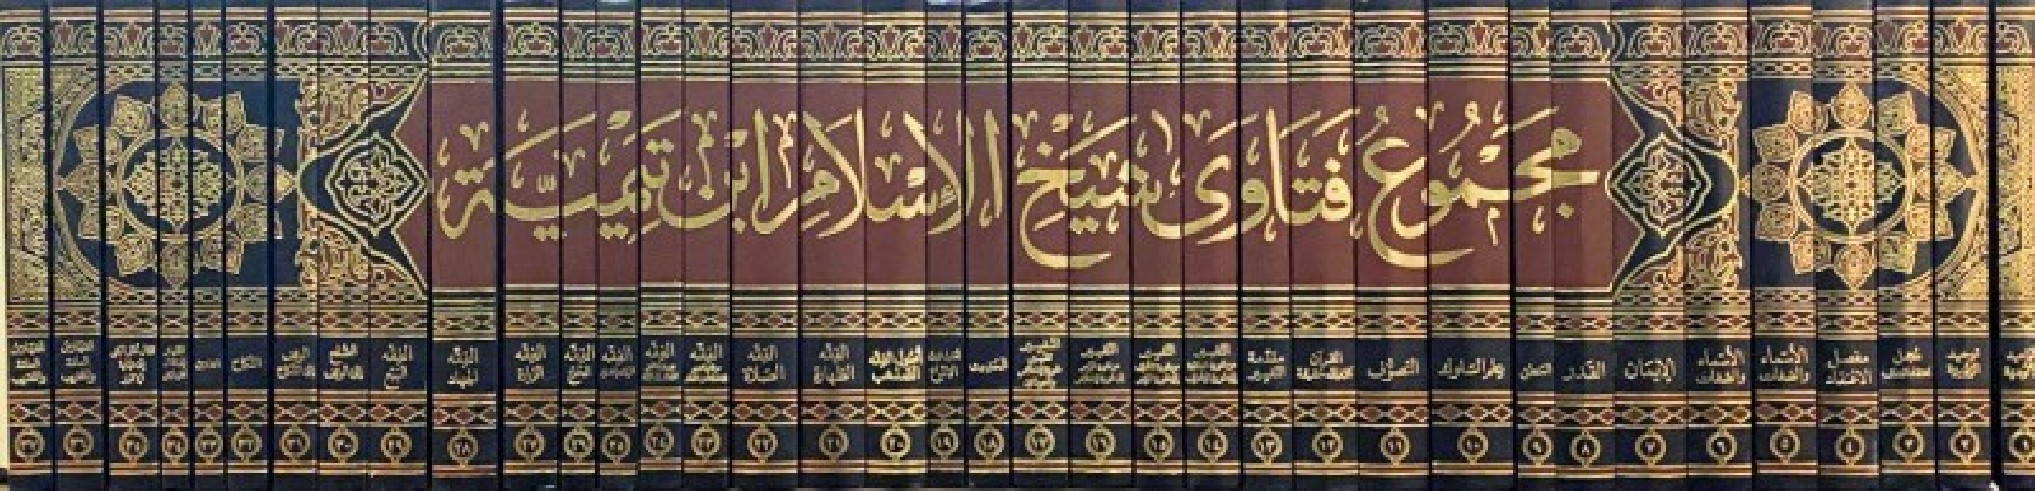 Majmoû' Fatâwâ Cheikh al Islâm ibn Taymiyya (37 Volumes)